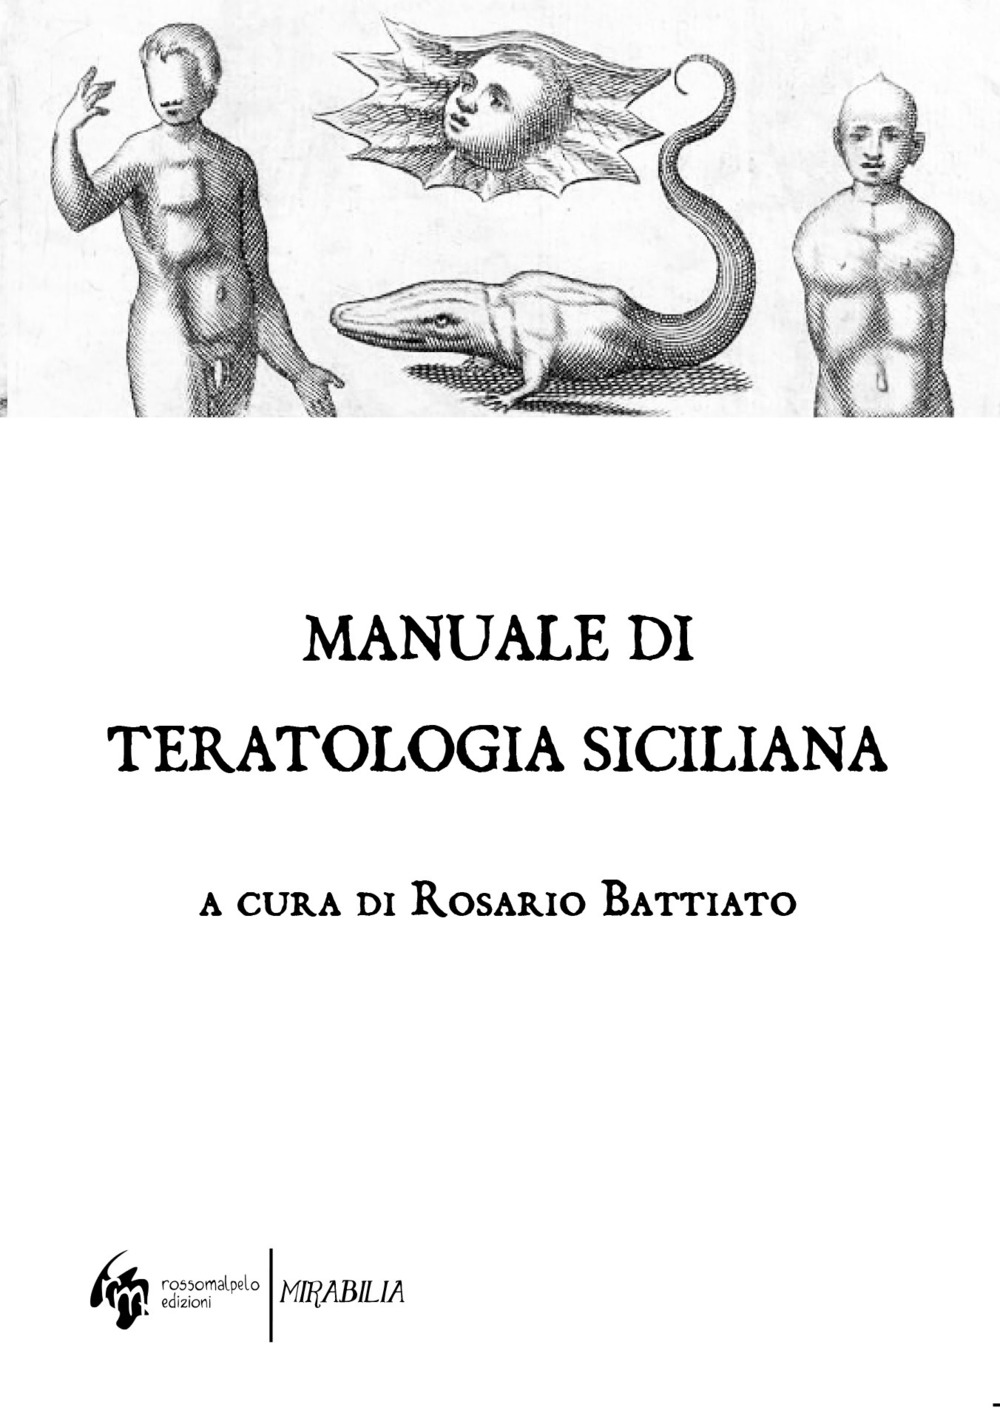 Manuale di teratologia siciliana